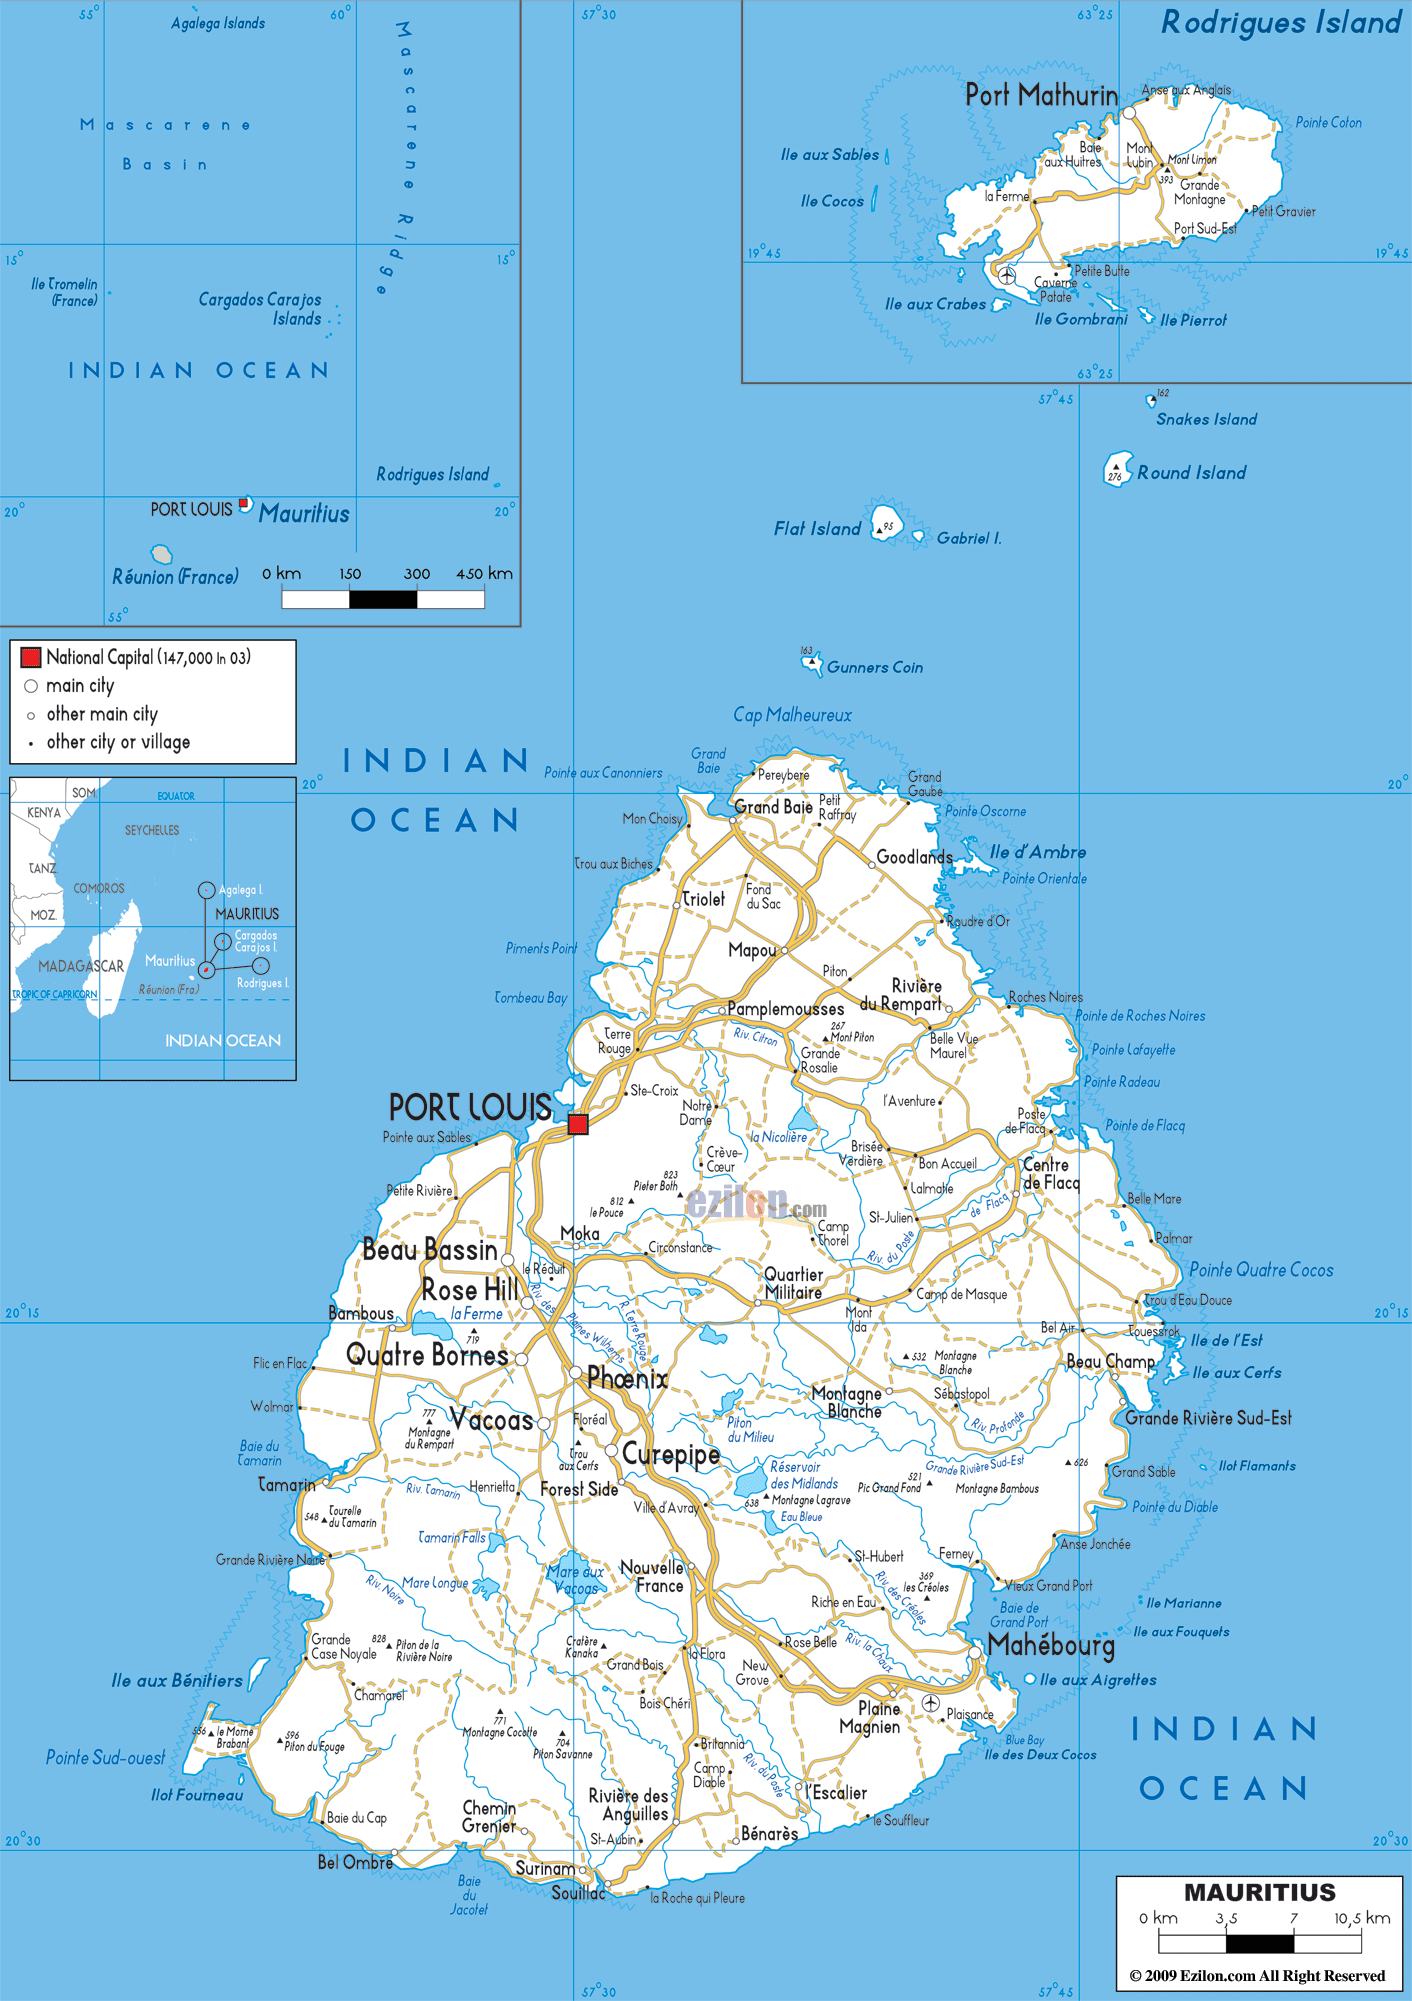 Mauritius road map